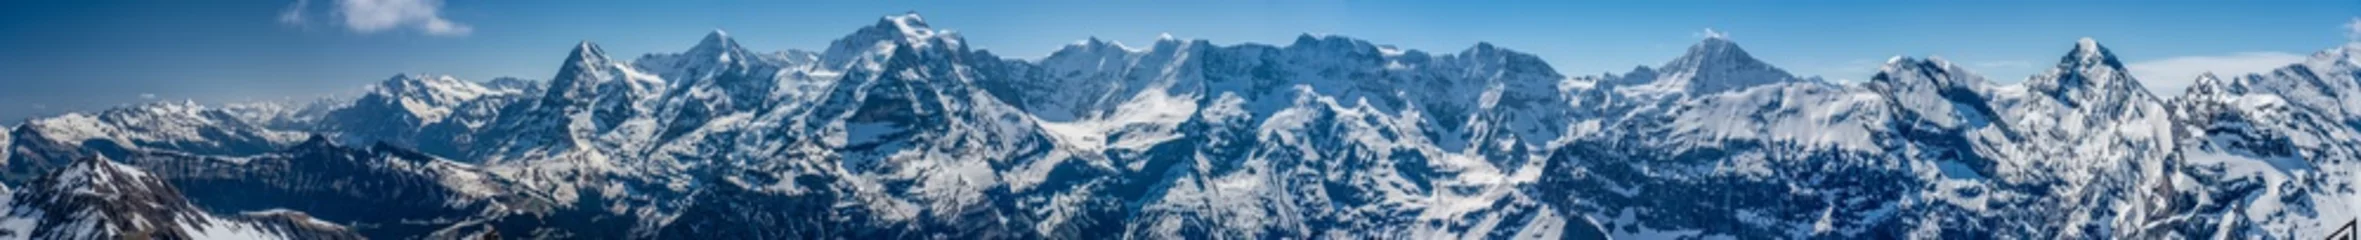 Keuken foto achterwand Panorama Zwitserland, sneeuw Alpen panorama uitzicht